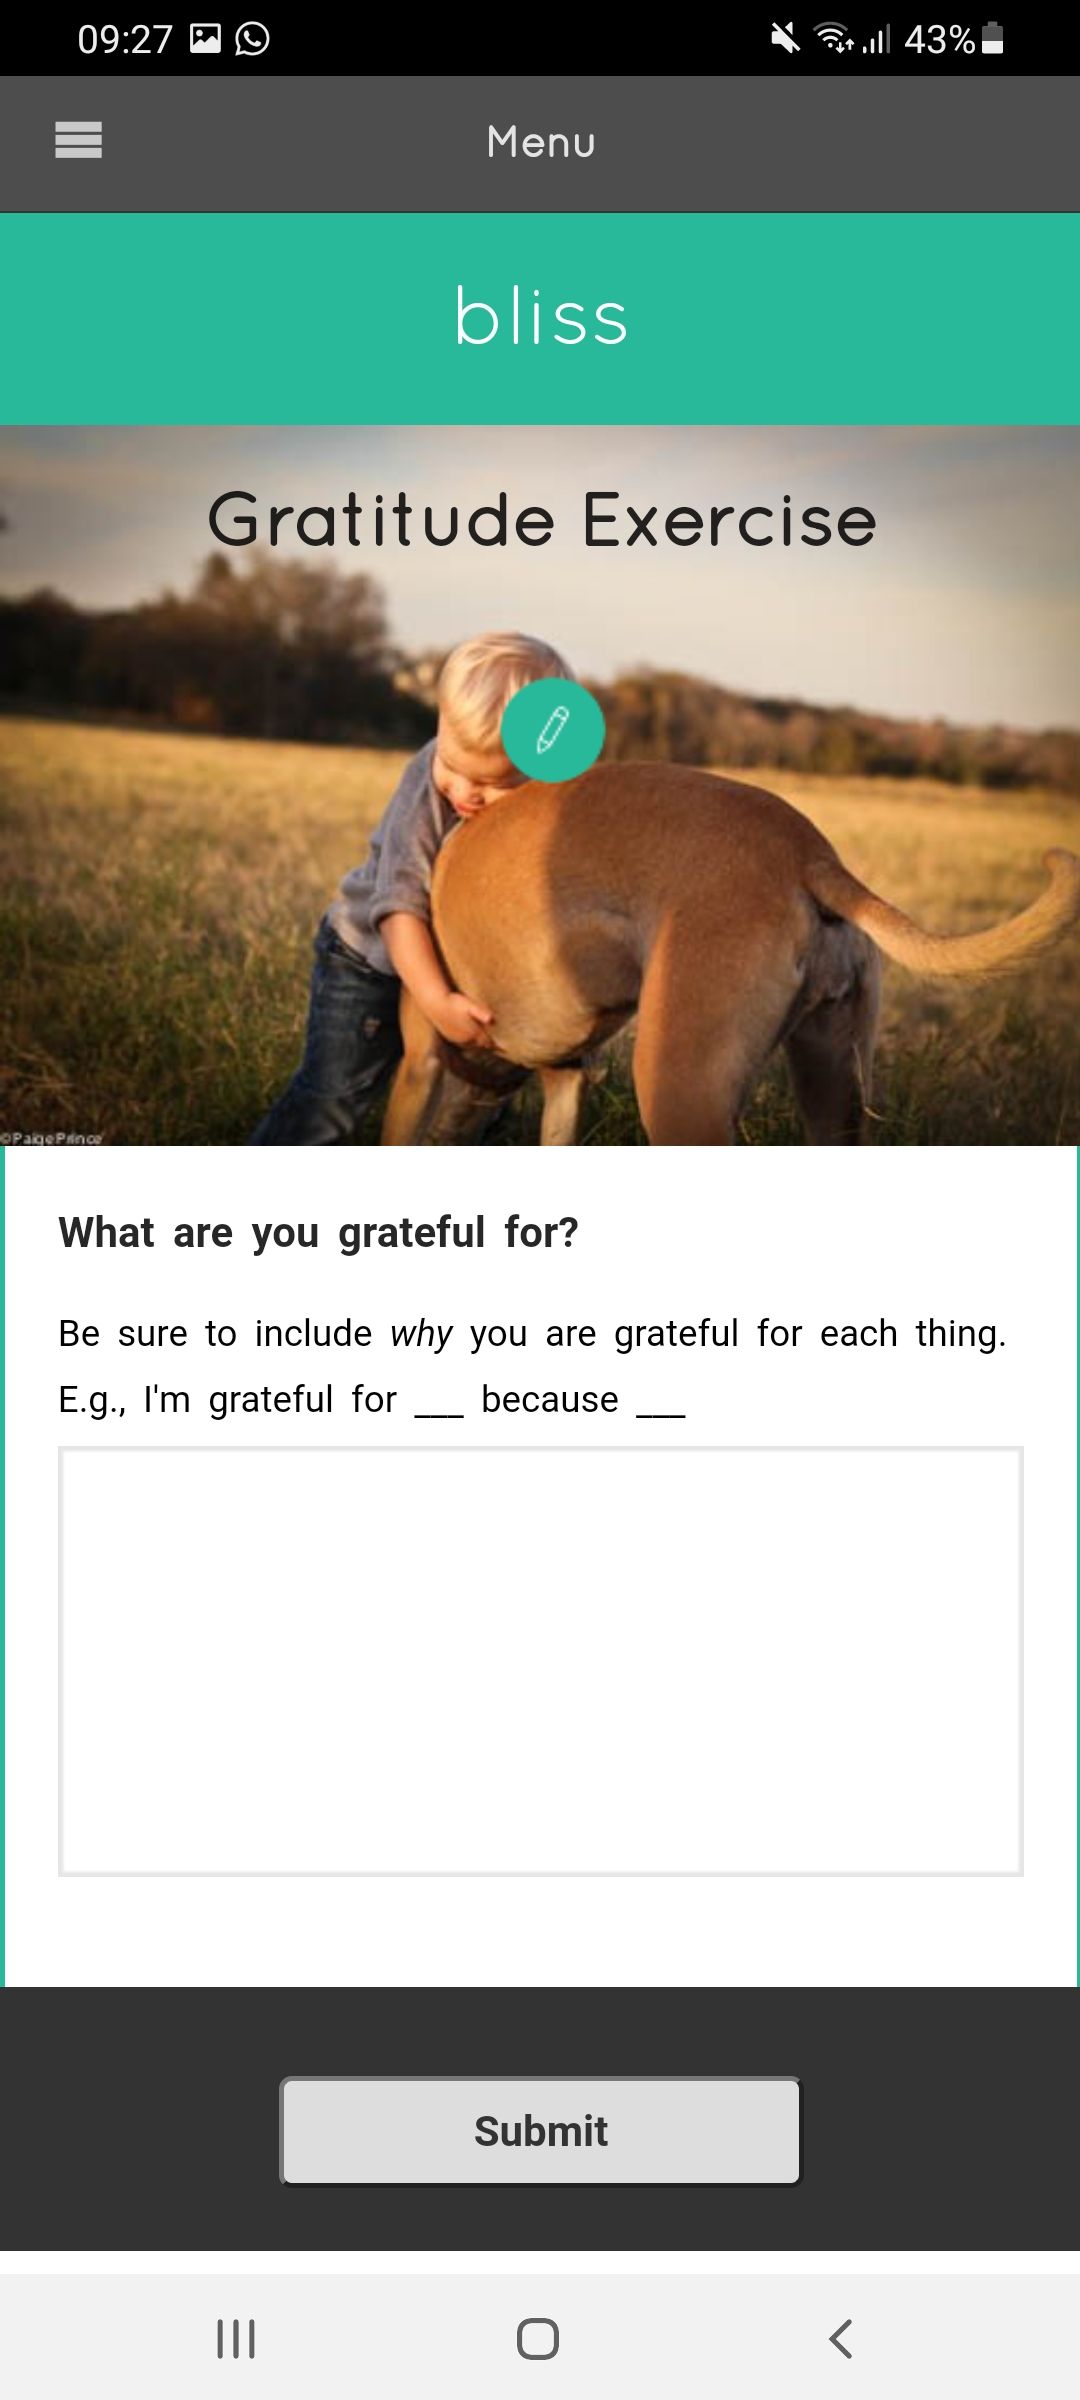 Bliss gratitude journal app example prompt